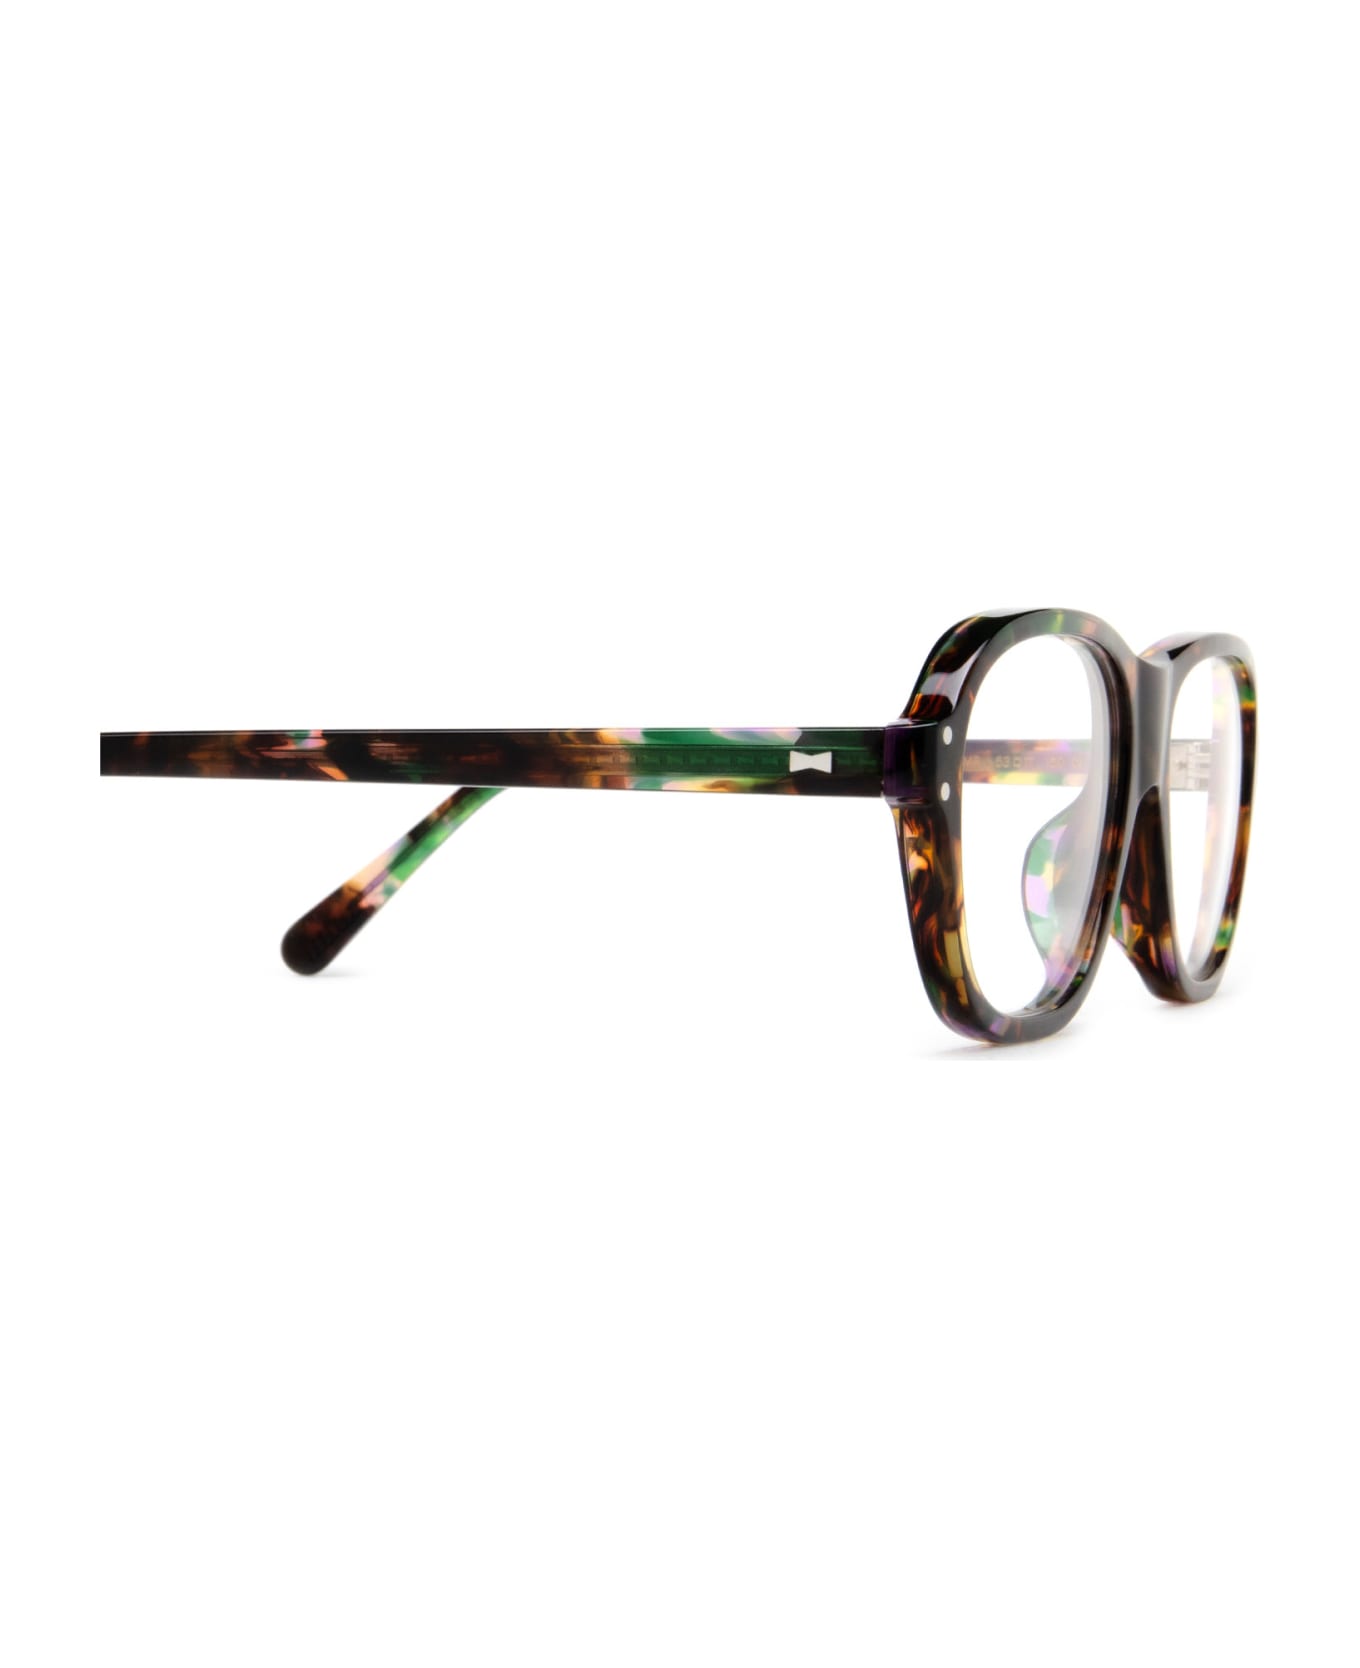 Cubitts Colonnade Emerald Rush Glasses - Emerald Rush アイウェア